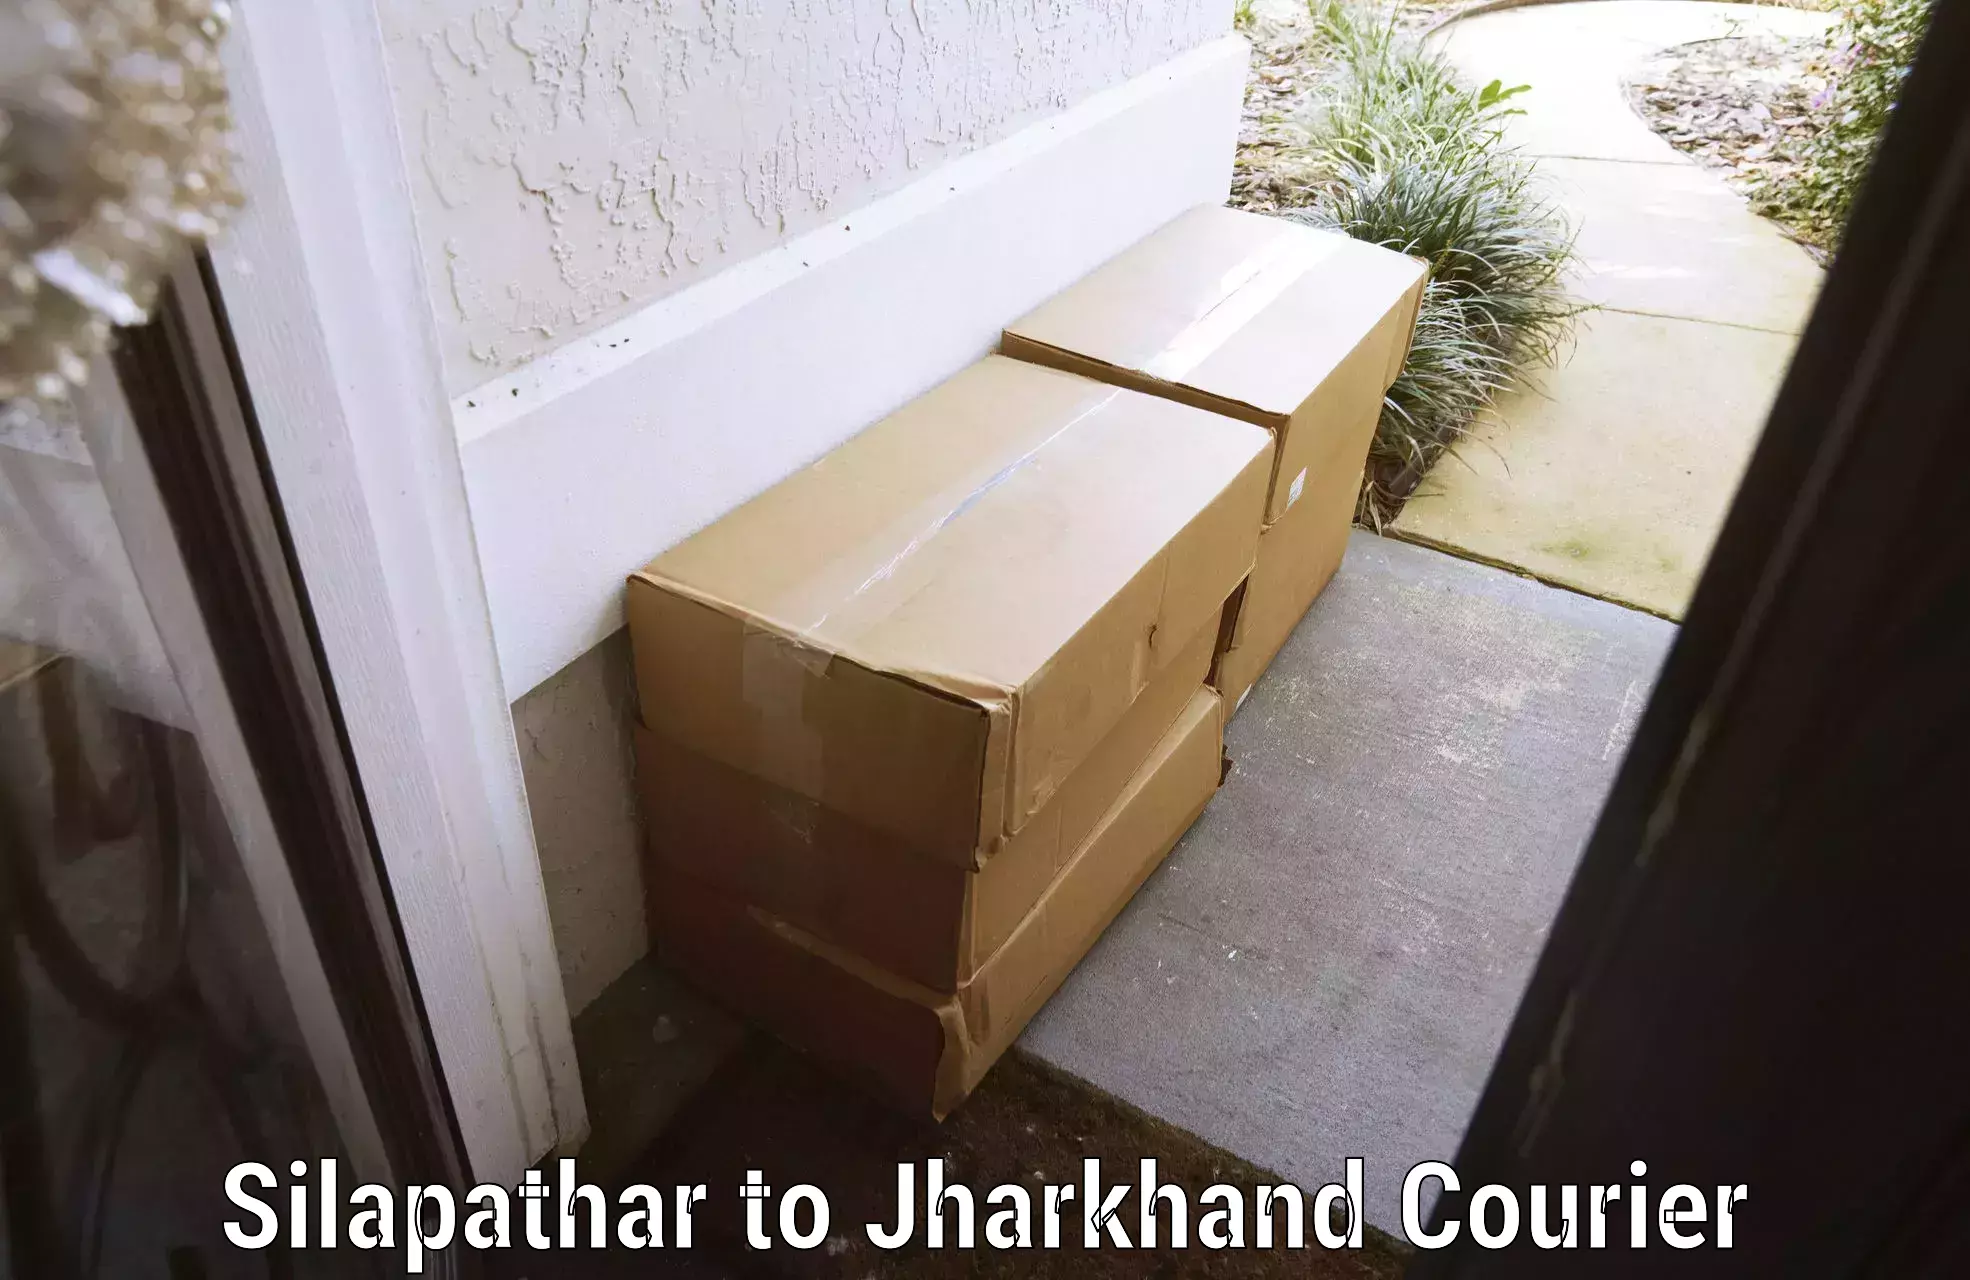 Door-to-door baggage service Silapathar to Ranchi